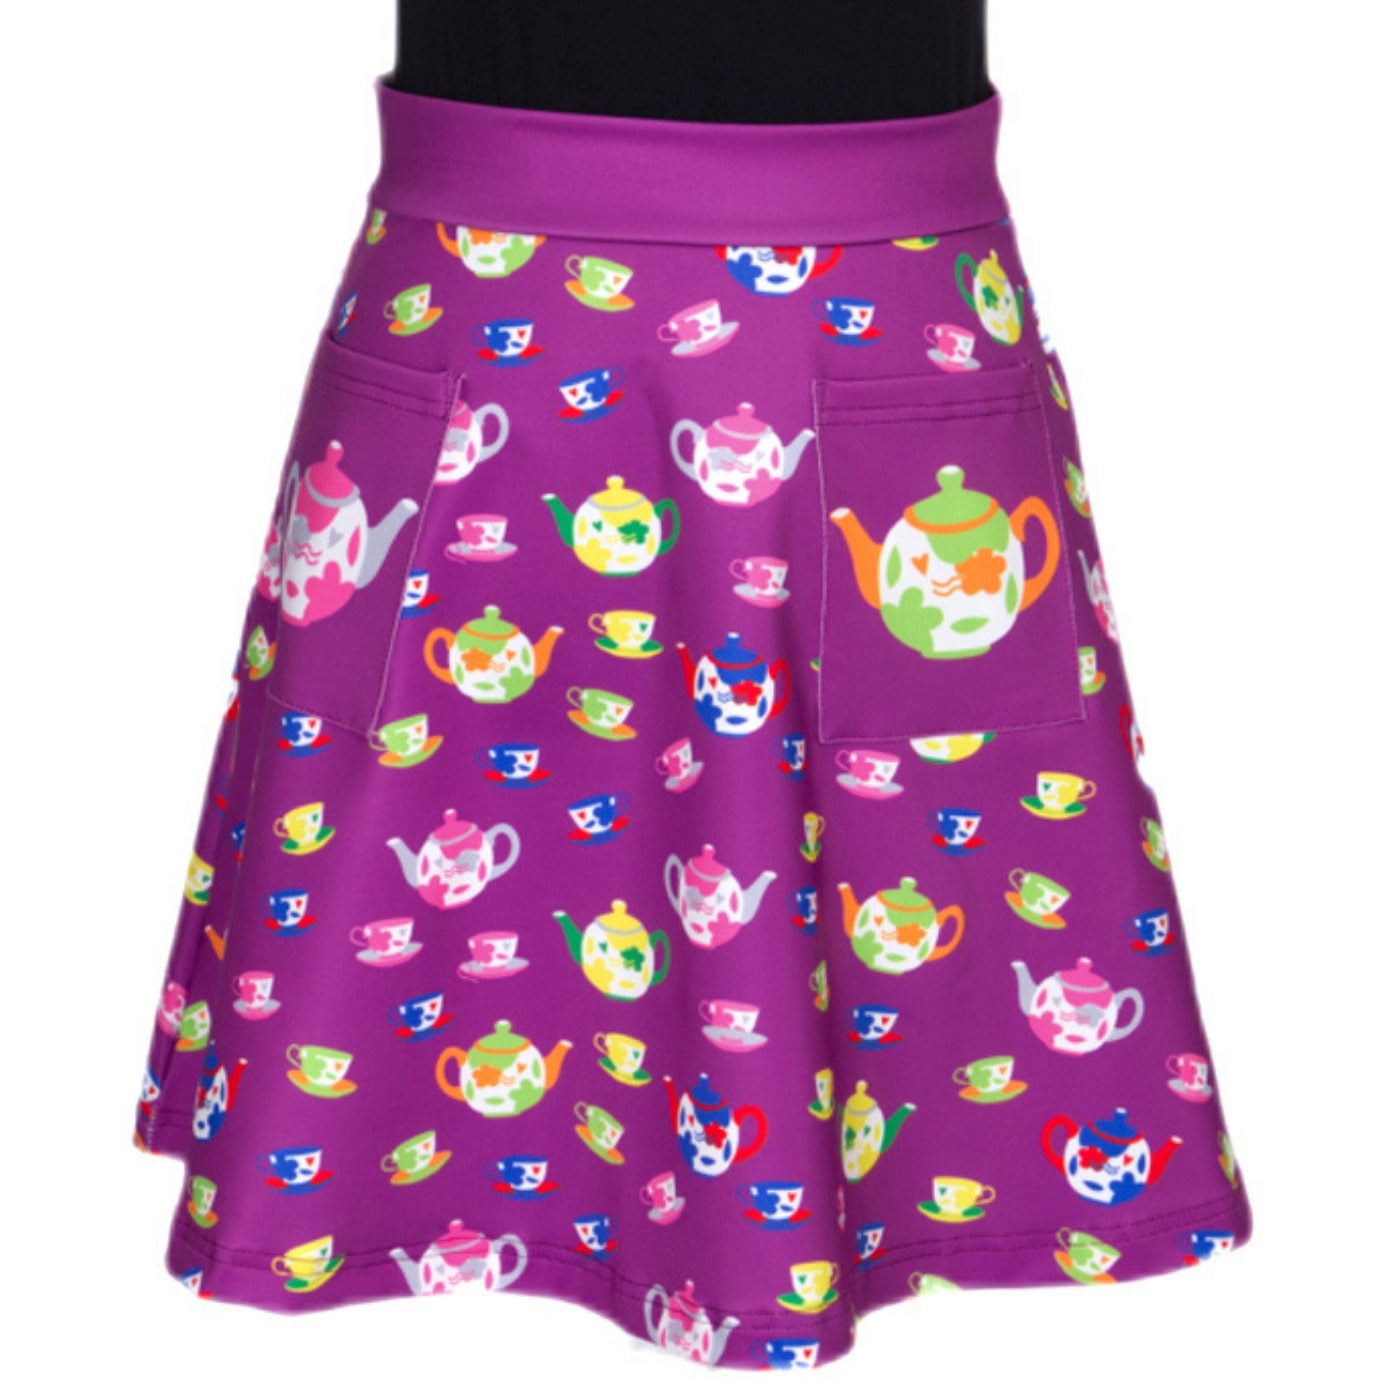 Tea Party Short Skirt by RainbowsAndFairies.com.au (Teacup - Teapot - Alice In Wonderland - Kitsch - Aline Skirt With Pockets - Vintage Inspired) - SKU: CL_SHORT_TEAPA_ORG - Pic-02